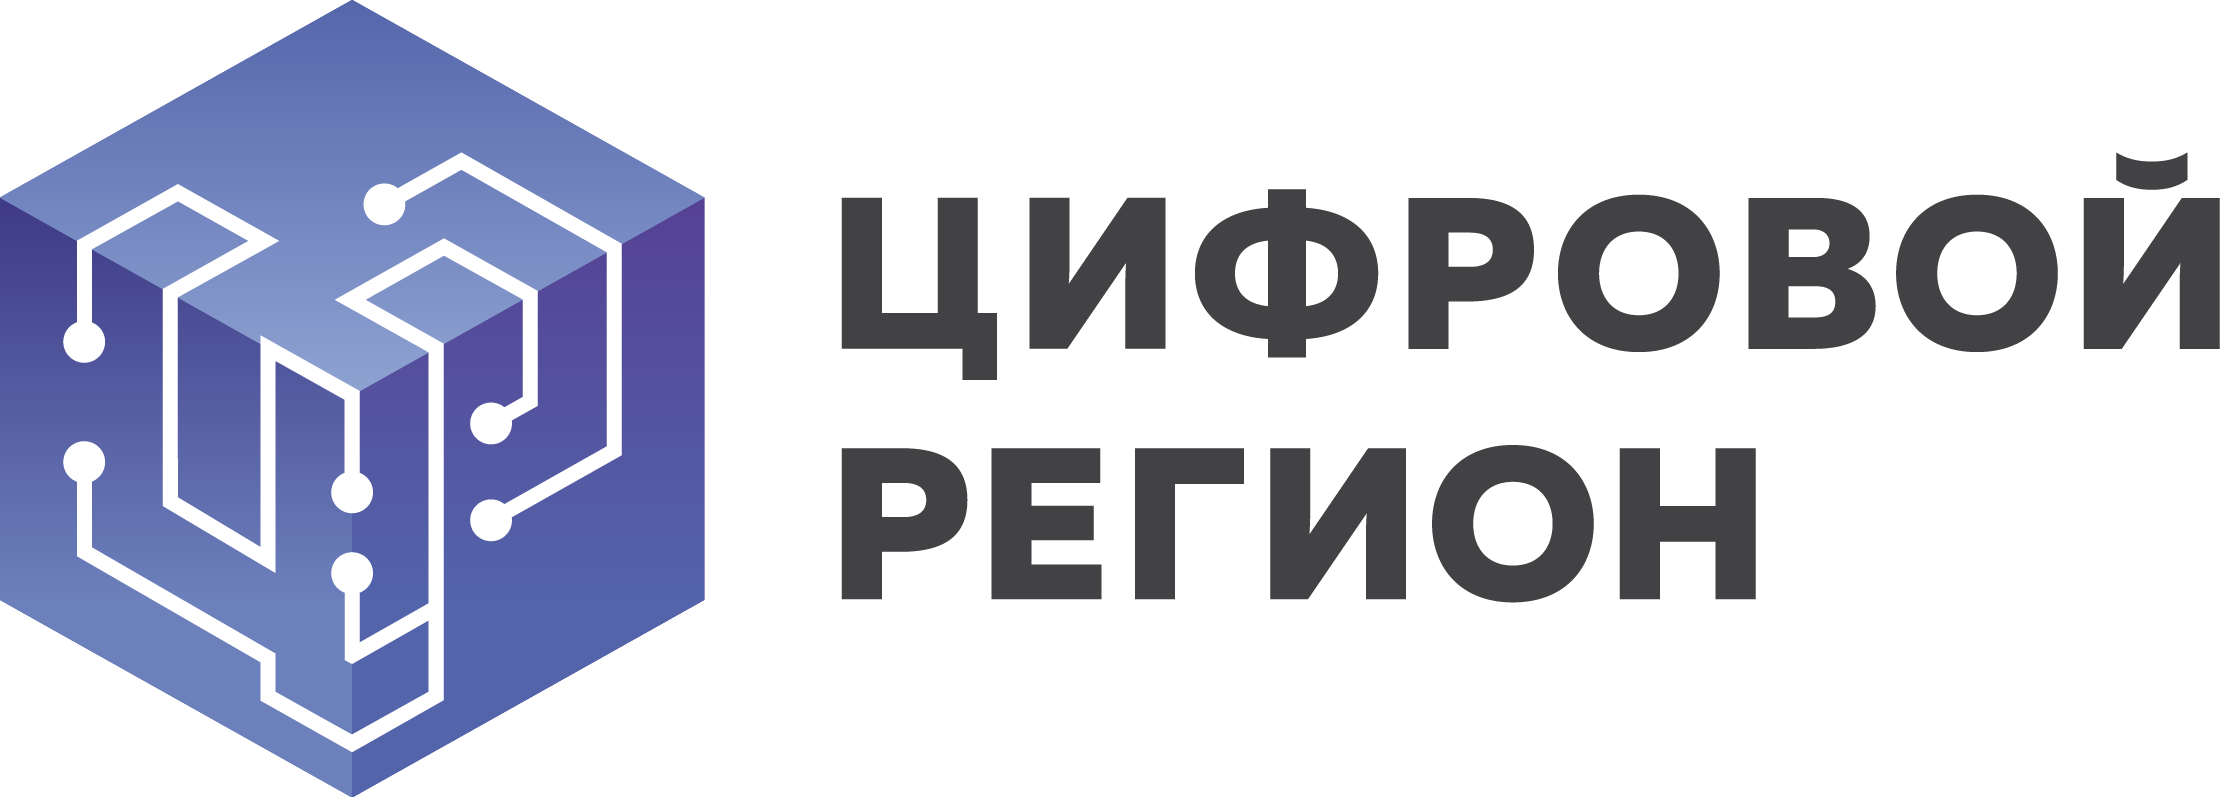 Логотип Цифровой регион